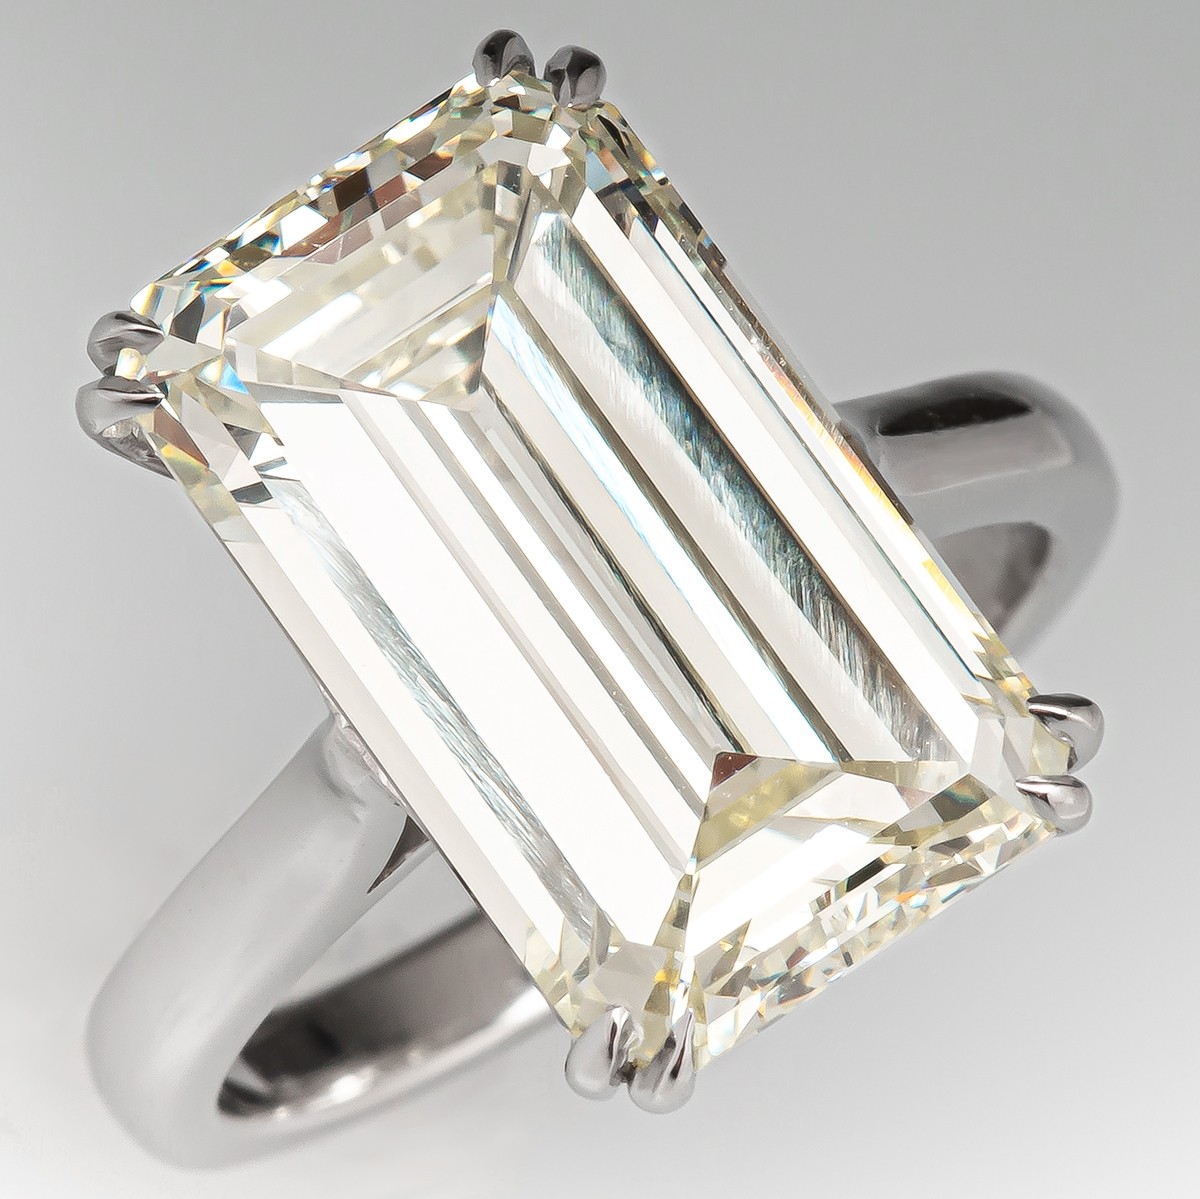 8 carat cushion cut diamond engagement ring - YouTube